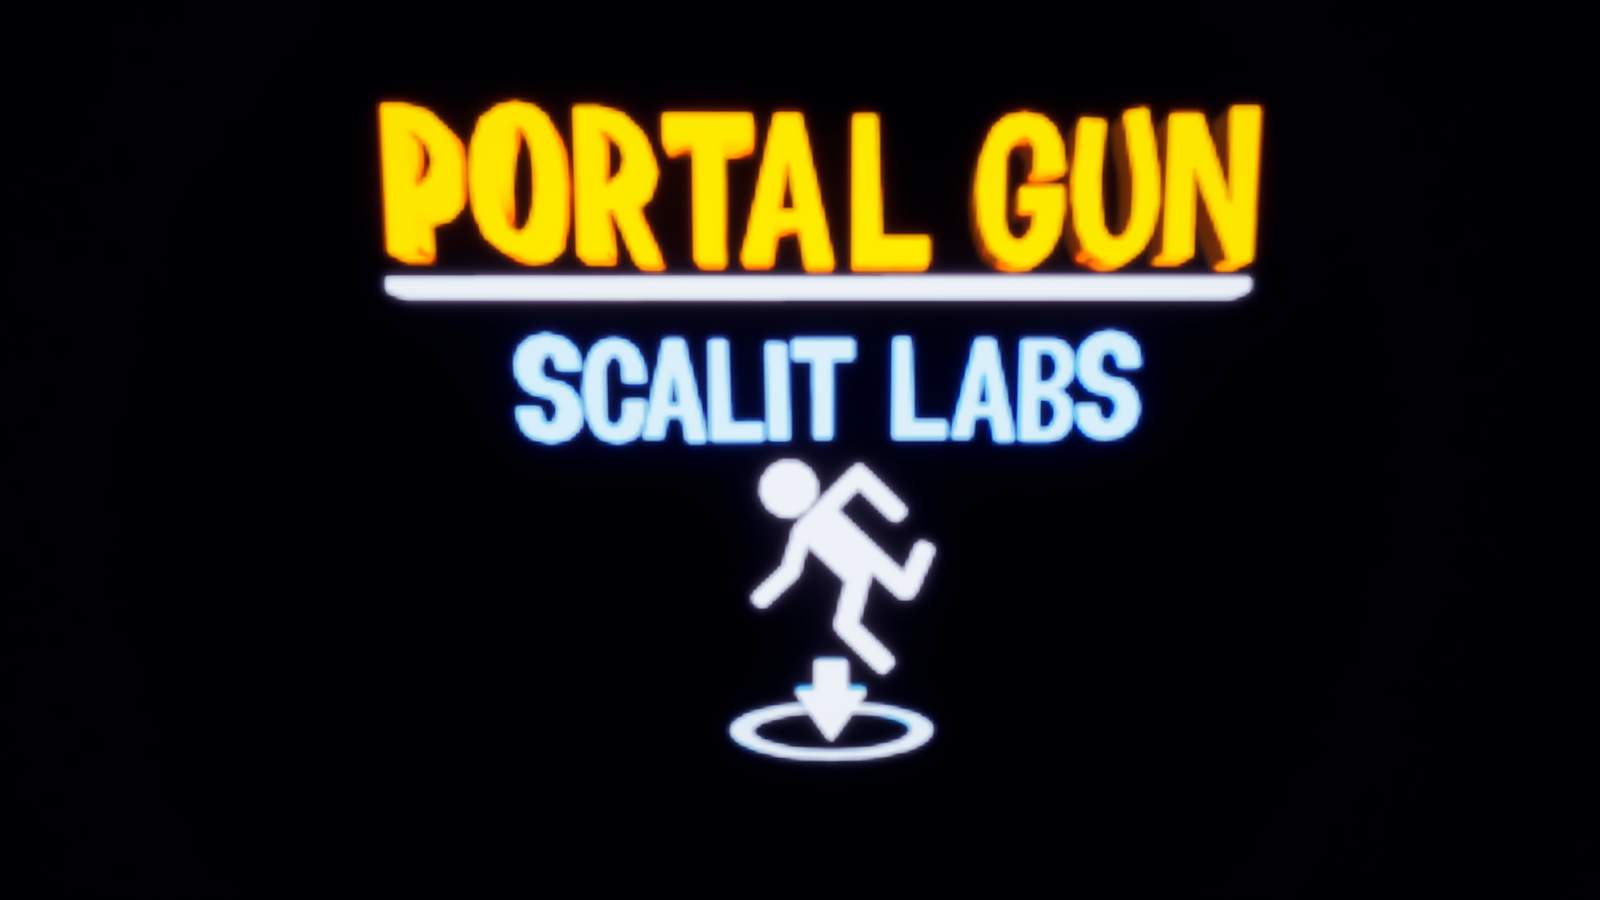 PORTAL GUN - ESCAPE SCALIT LABS image 2